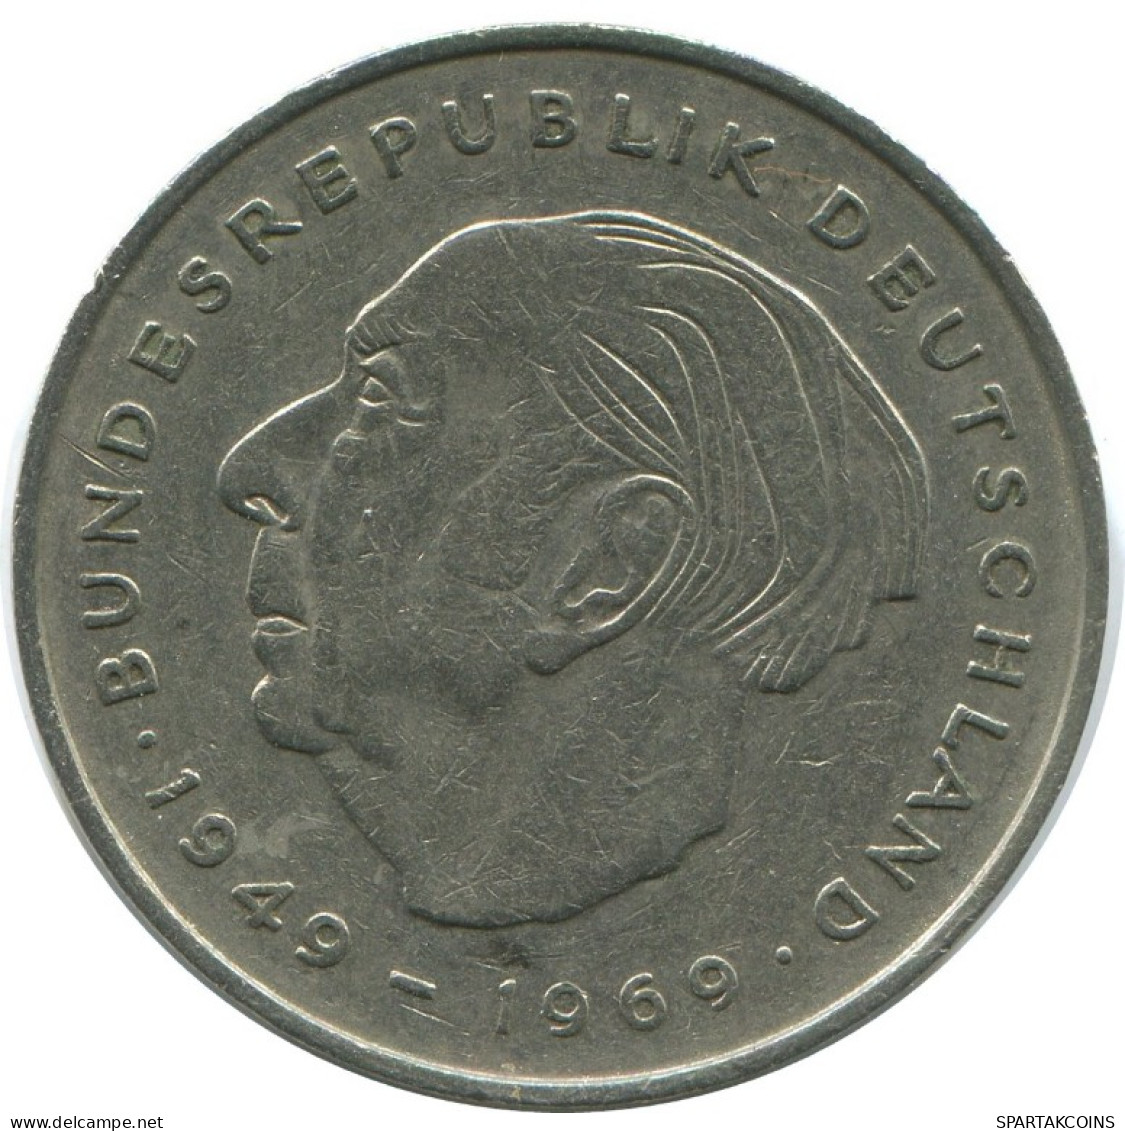 2 DM 1973 D T.HEUSS WEST & UNIFIED GERMANY Coin #AG236.3.U.A - 2 Mark